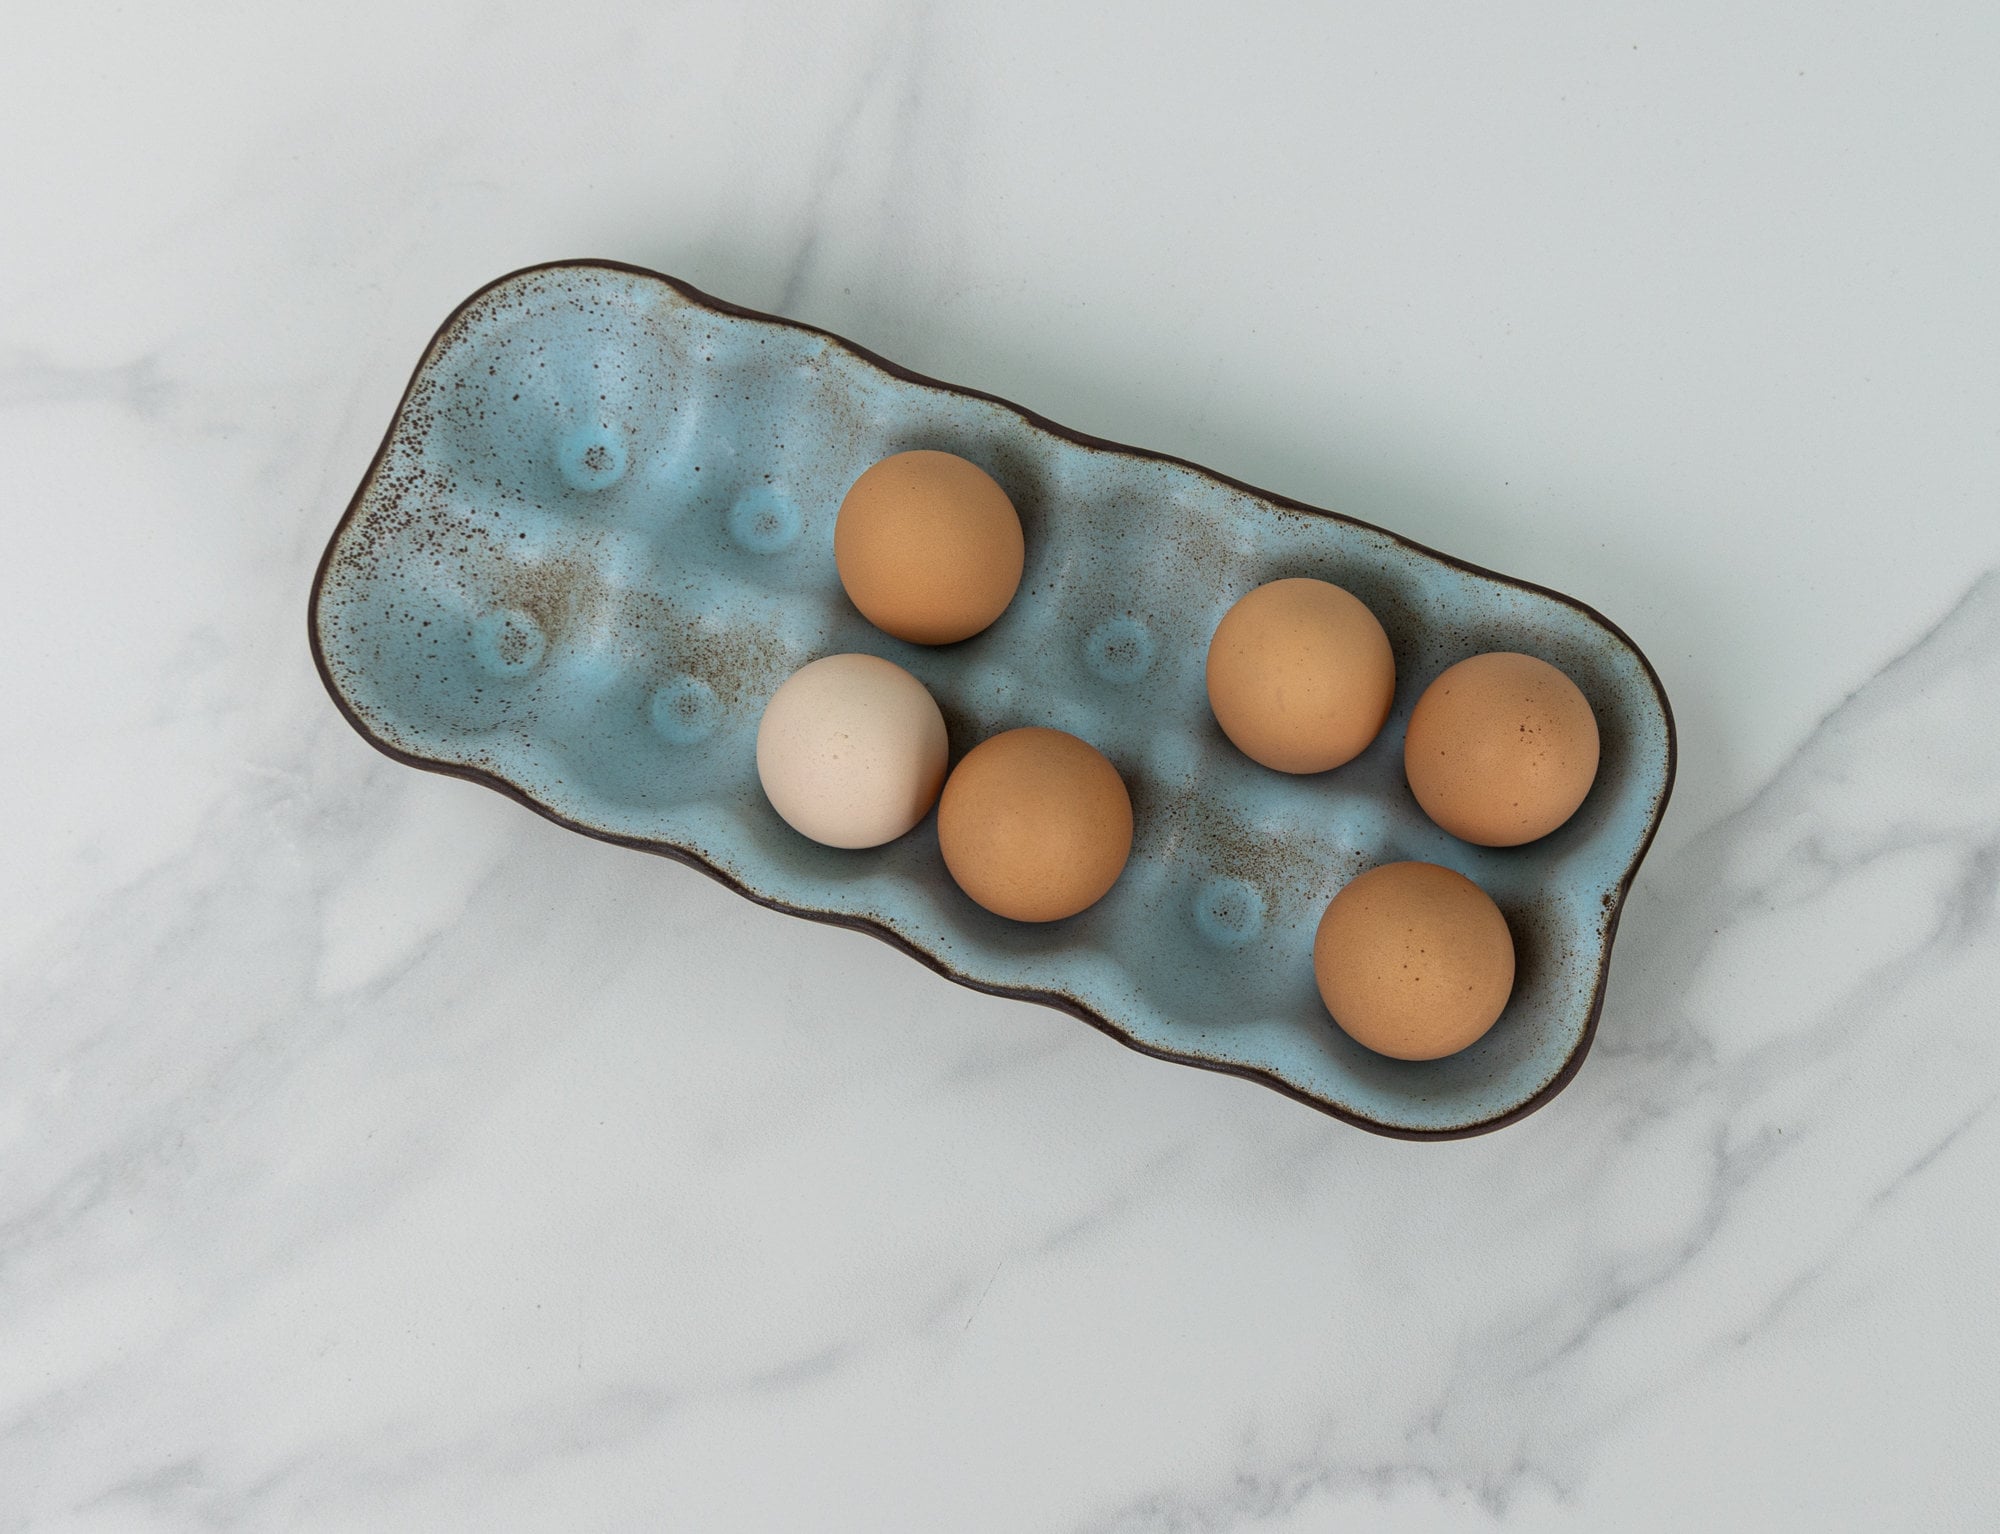 DEAYOU 3-Pack 18 Cups Ceramic Egg Holder, Half Dozen Porcelain Egg Tray